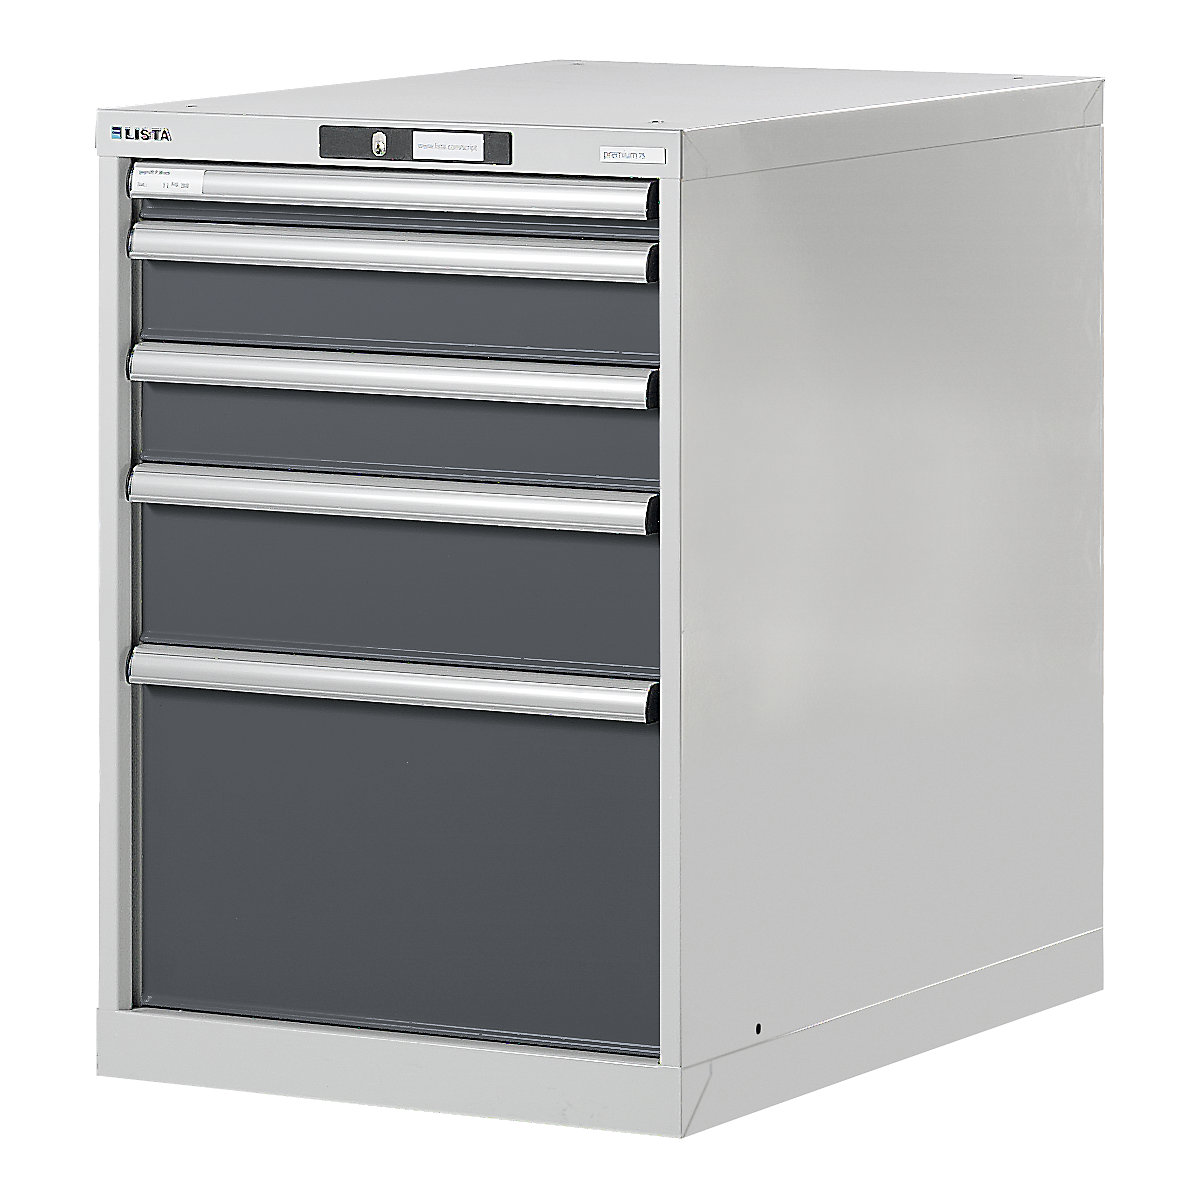 Modular workbench system, drawer unit – LISTA, height 800 mm, 5 drawers, metallic grey-7